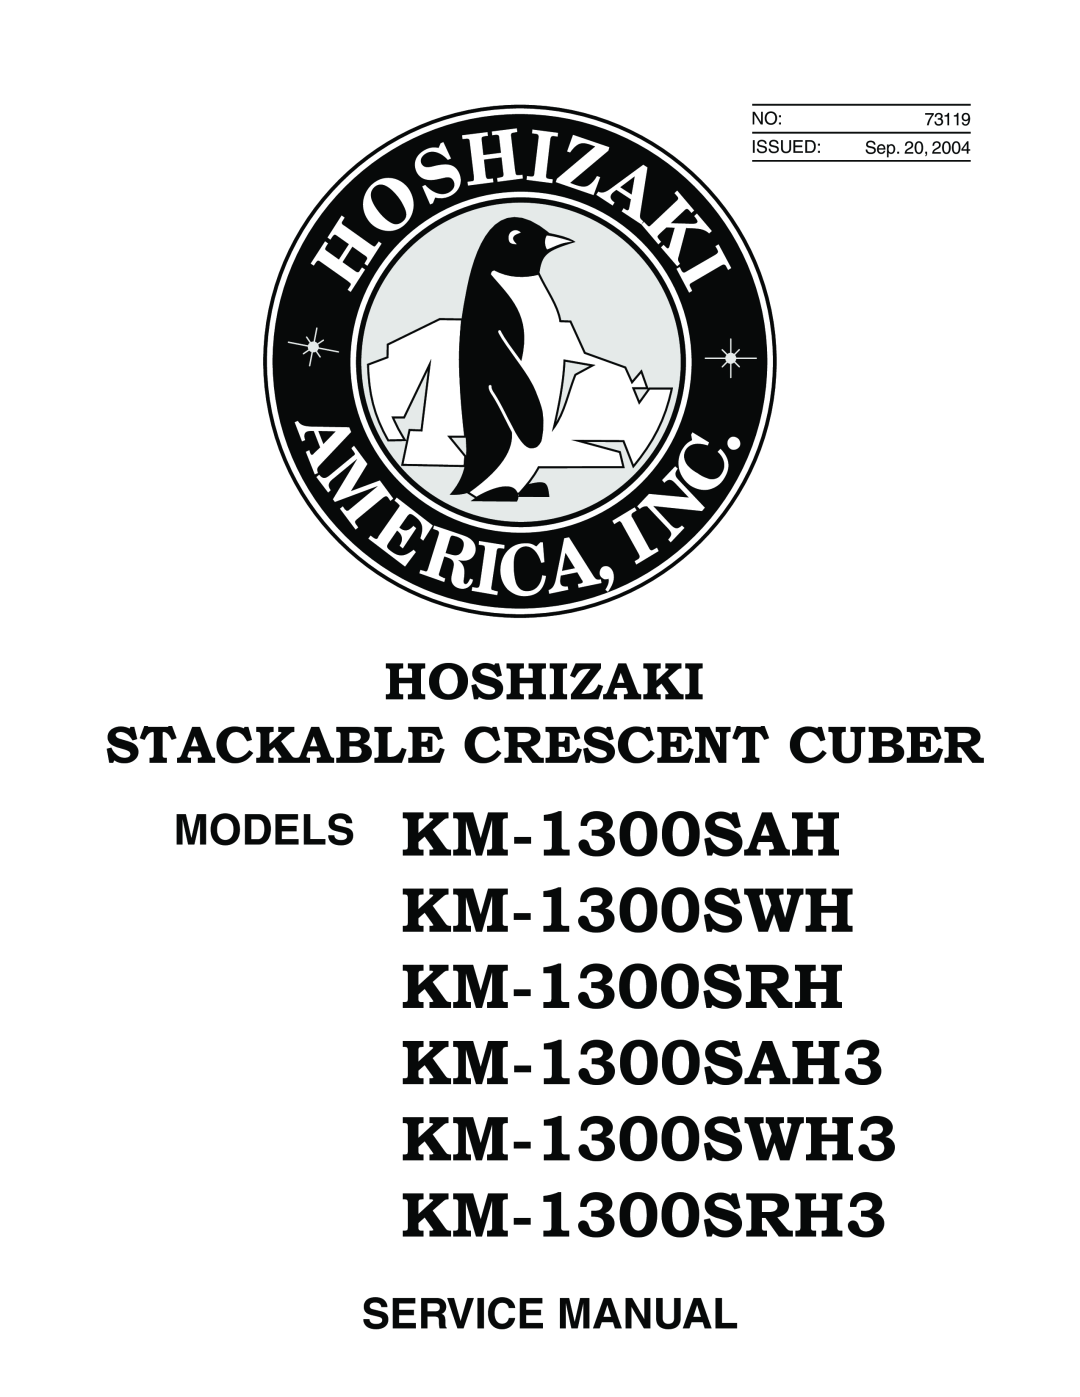 Hoshizaki KM-1300SWH3, KM-1300SAH3, KM-1300SRH3 service manual Hoshizaki Stackable Crescent Cuber, Sep 